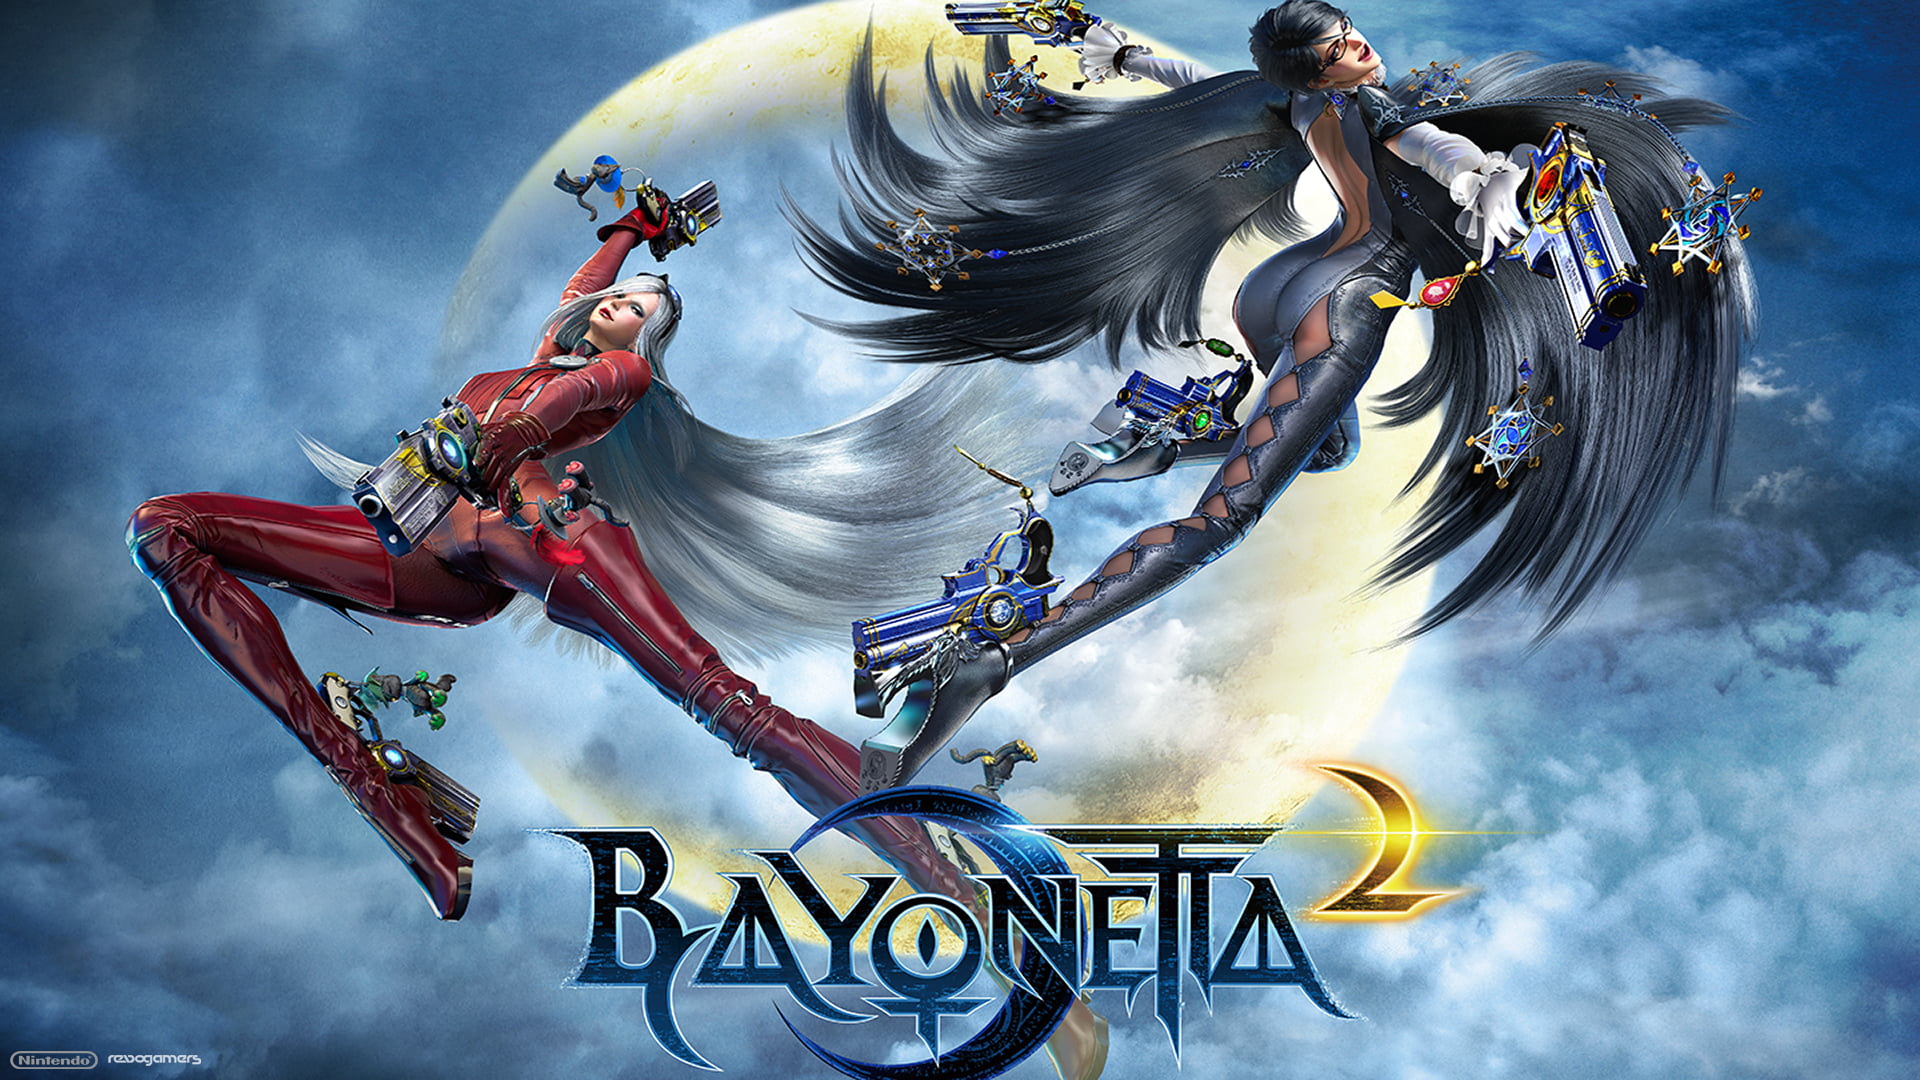 Bayoneta 2 Digital Wallapaper Bayonetta Bayonetta 2 Wii U Images, Photos, Reviews